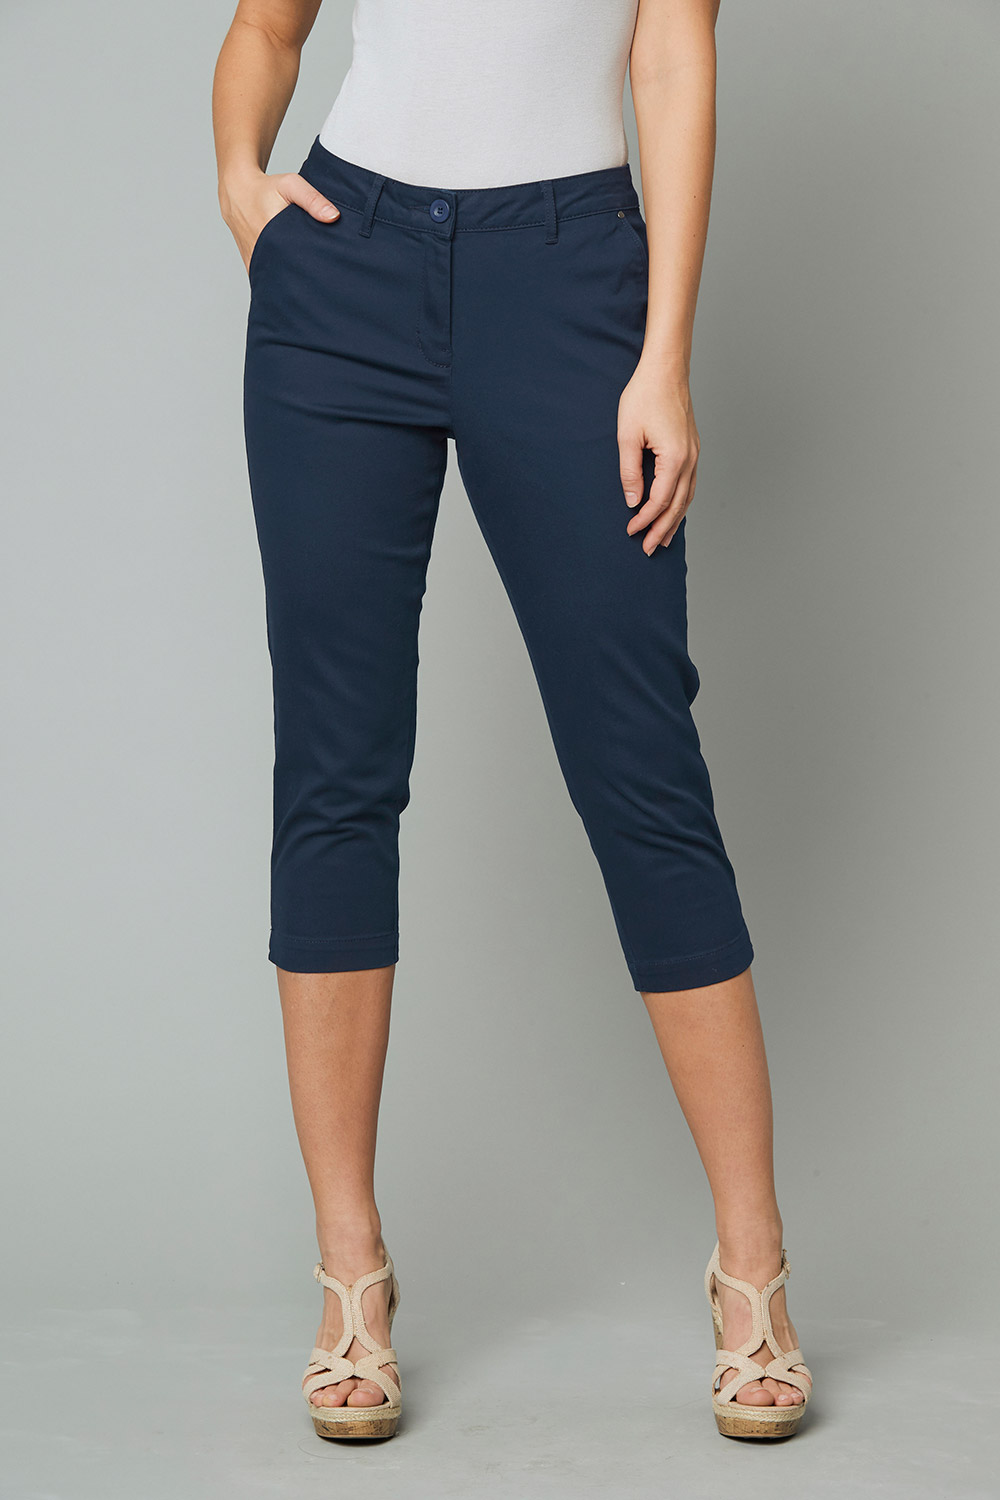 Buy Light Blue Trousers  Pants for Women by Marks  Spencer Online   Ajiocom